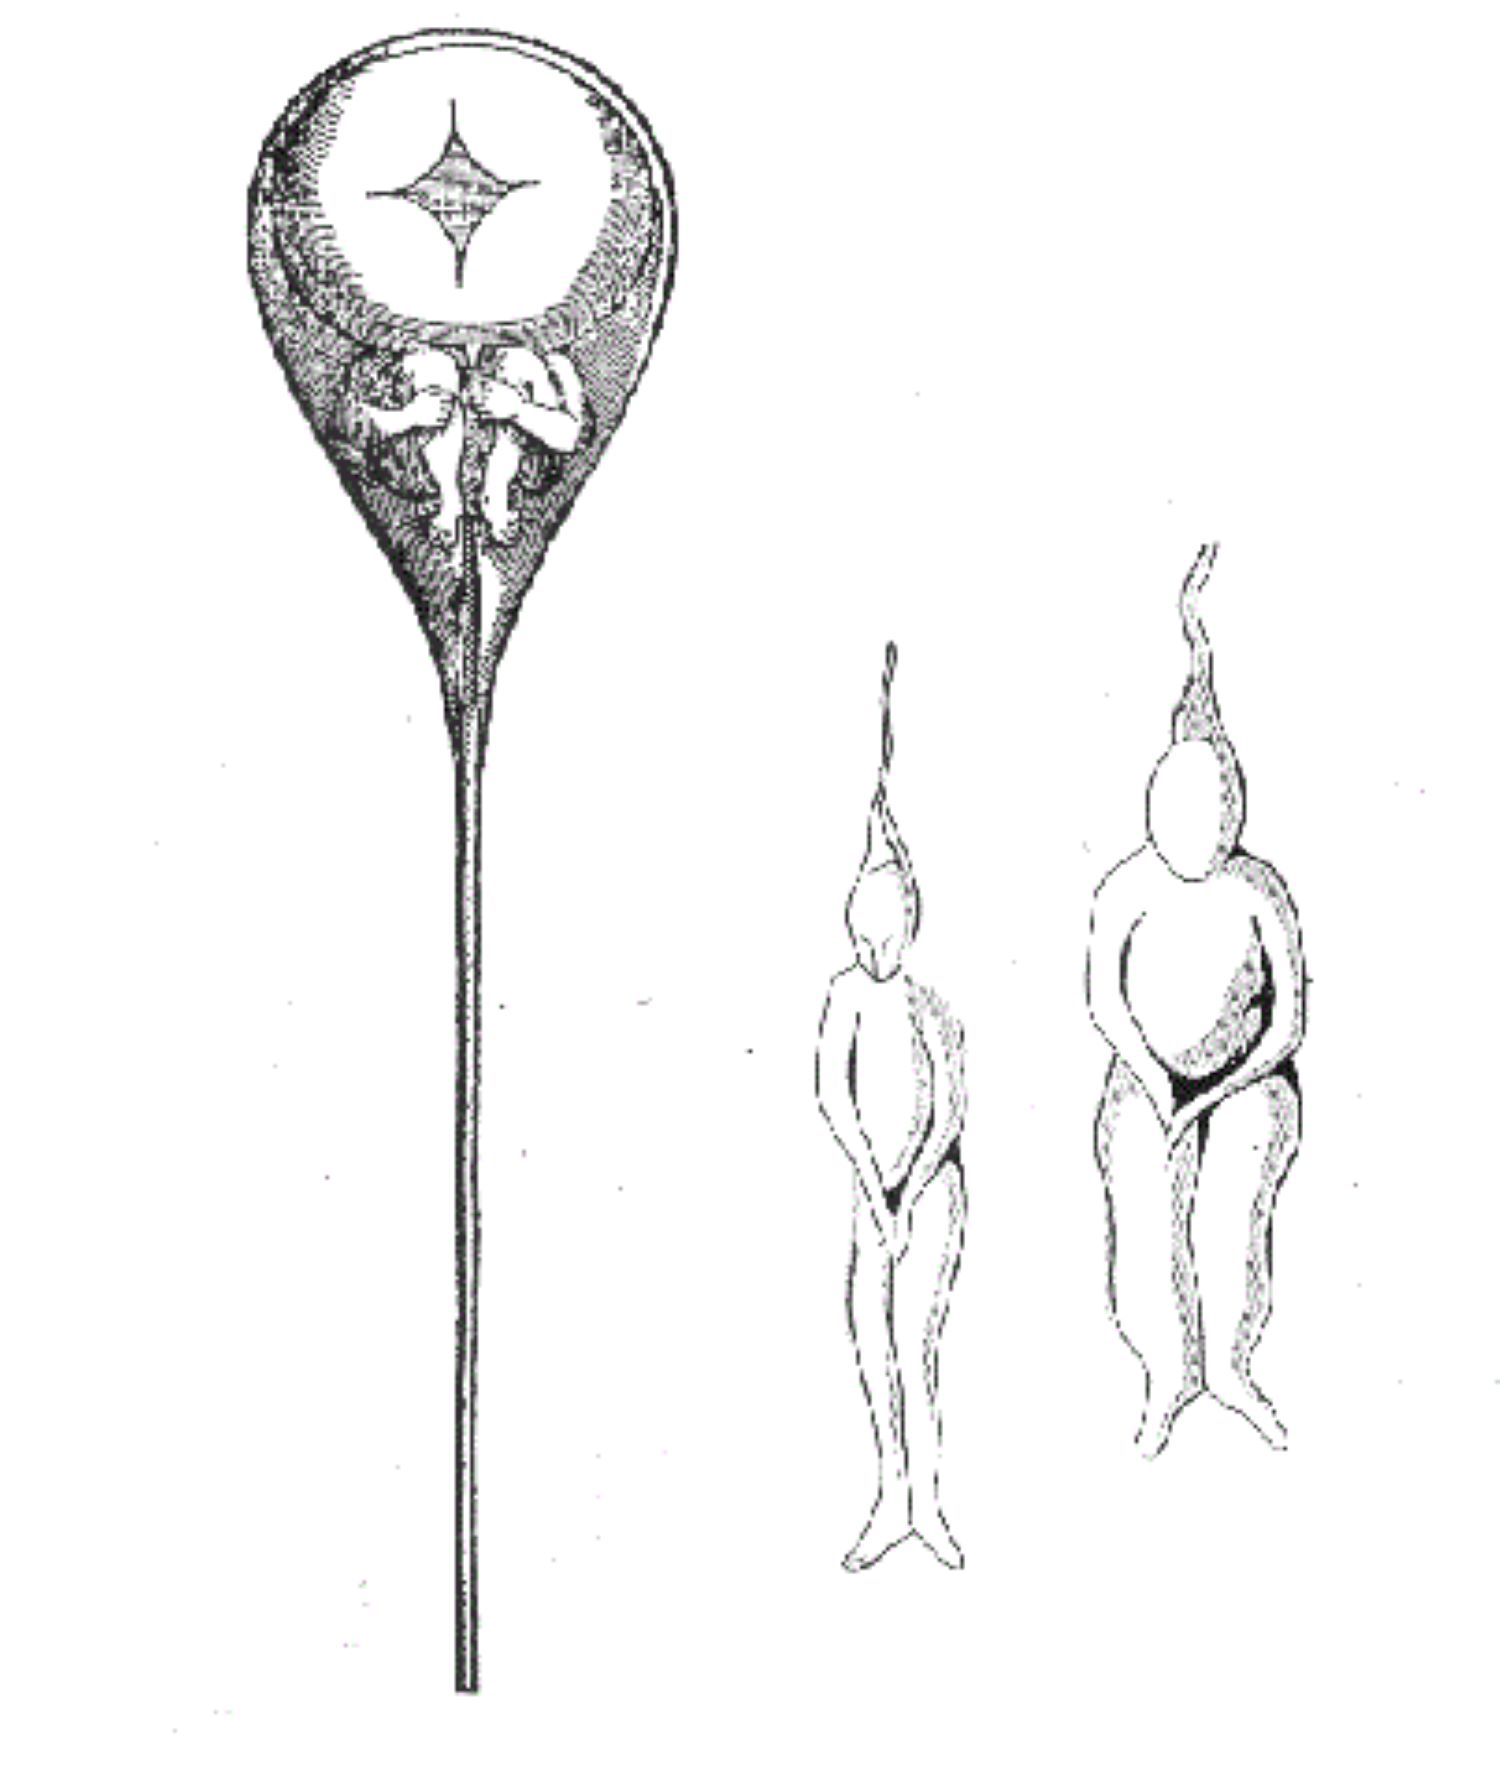 Nicolaas Hartsoeker preformation sketch showing what he thought was inside sperm